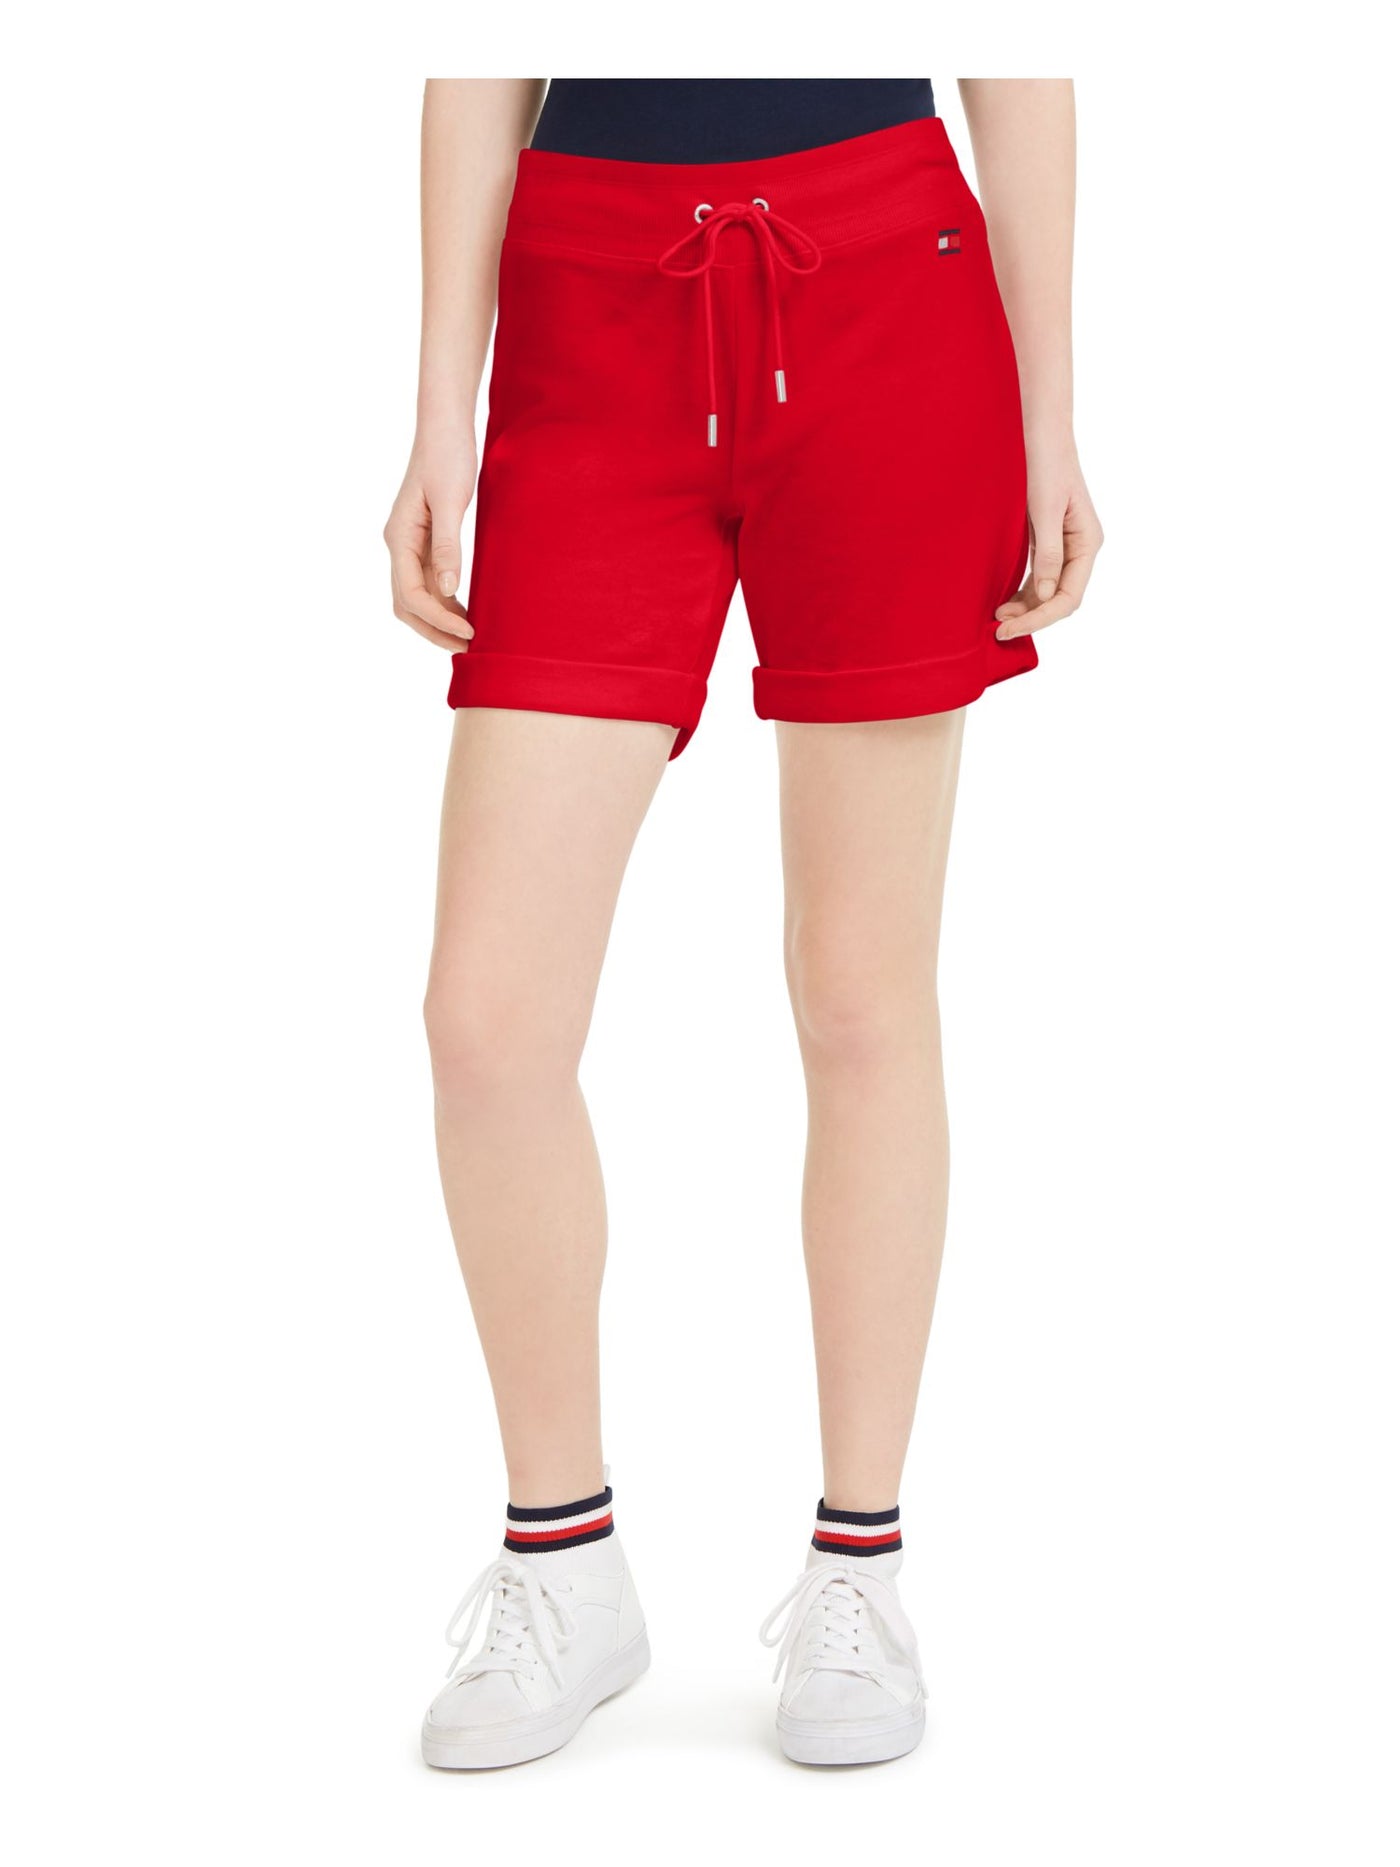 TOMMY HILFIGER SPORT Womens Red Cuffed Shorts XS